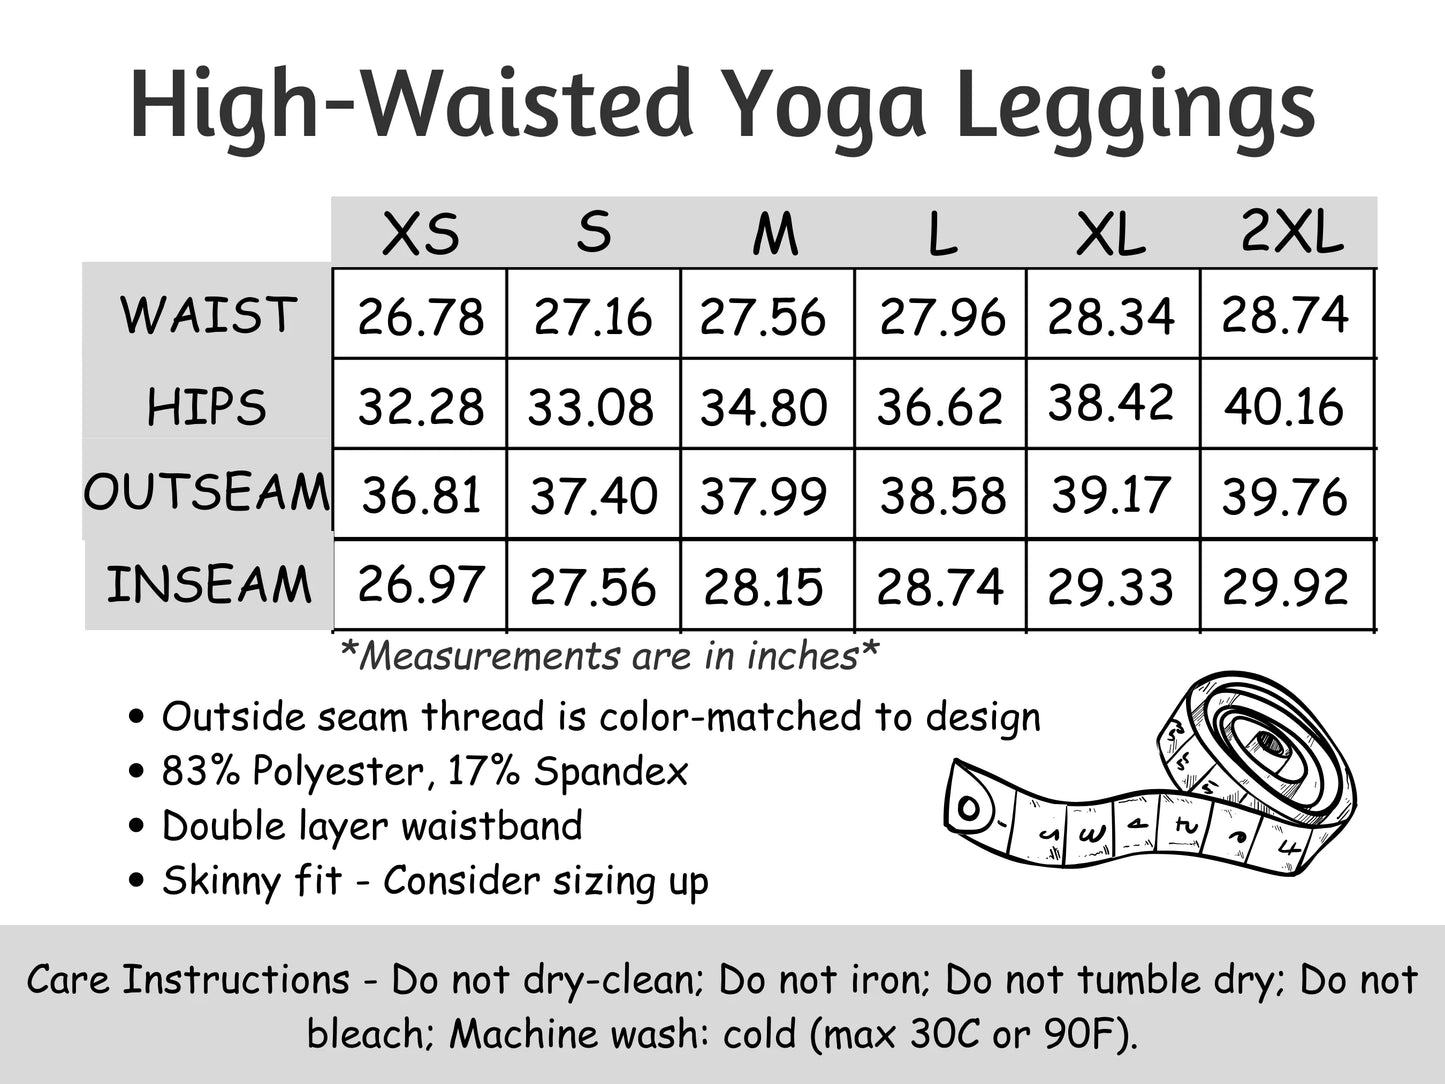 KMW Swirls - High Waisted Yoga Leggings